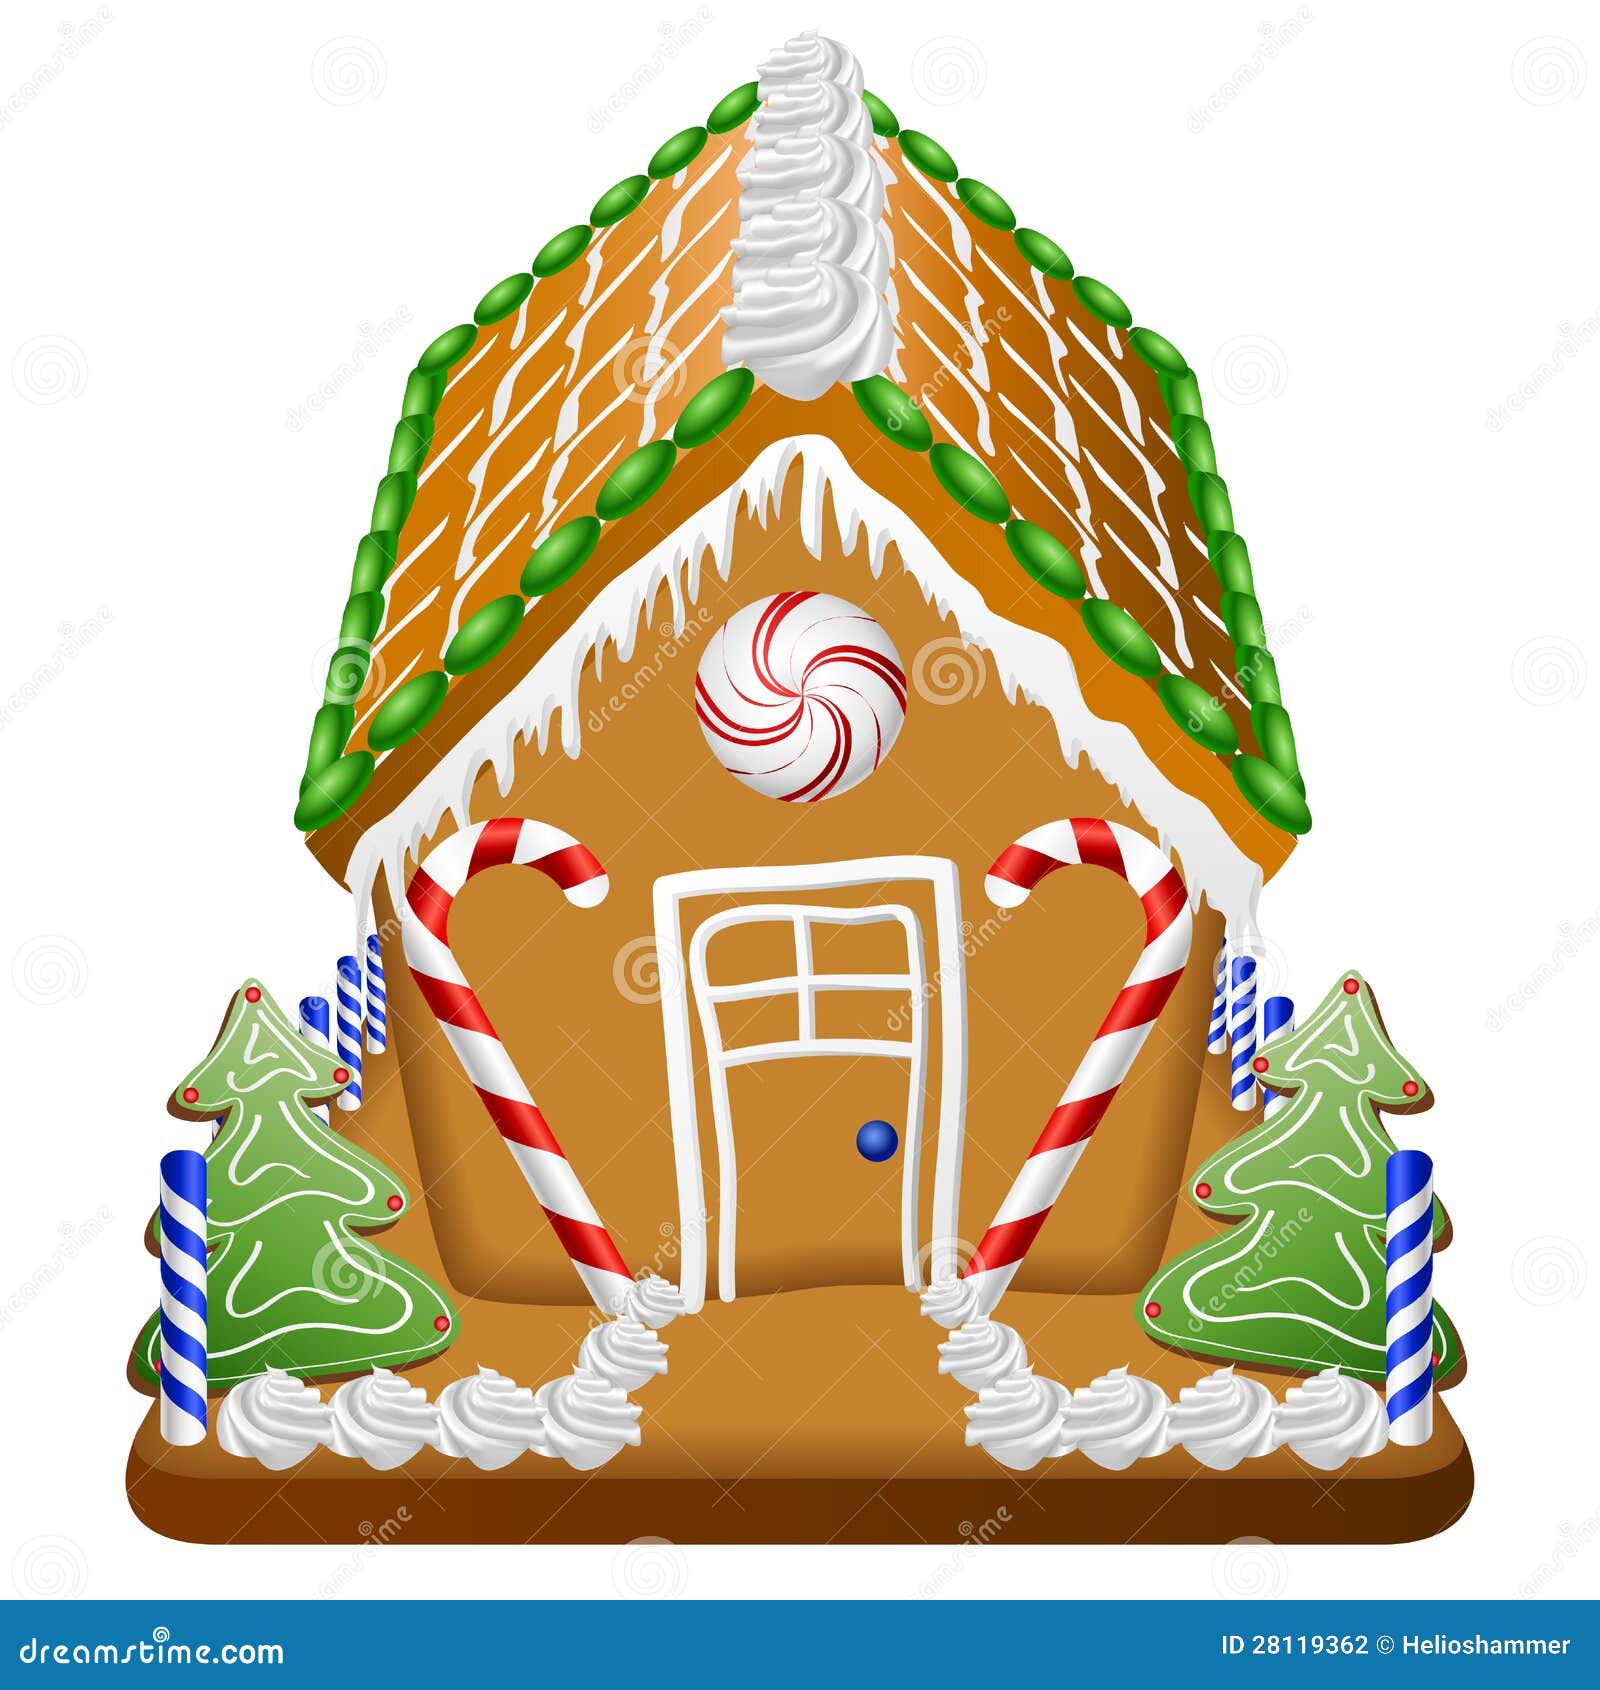 cute gingerbread house clipart - photo #31